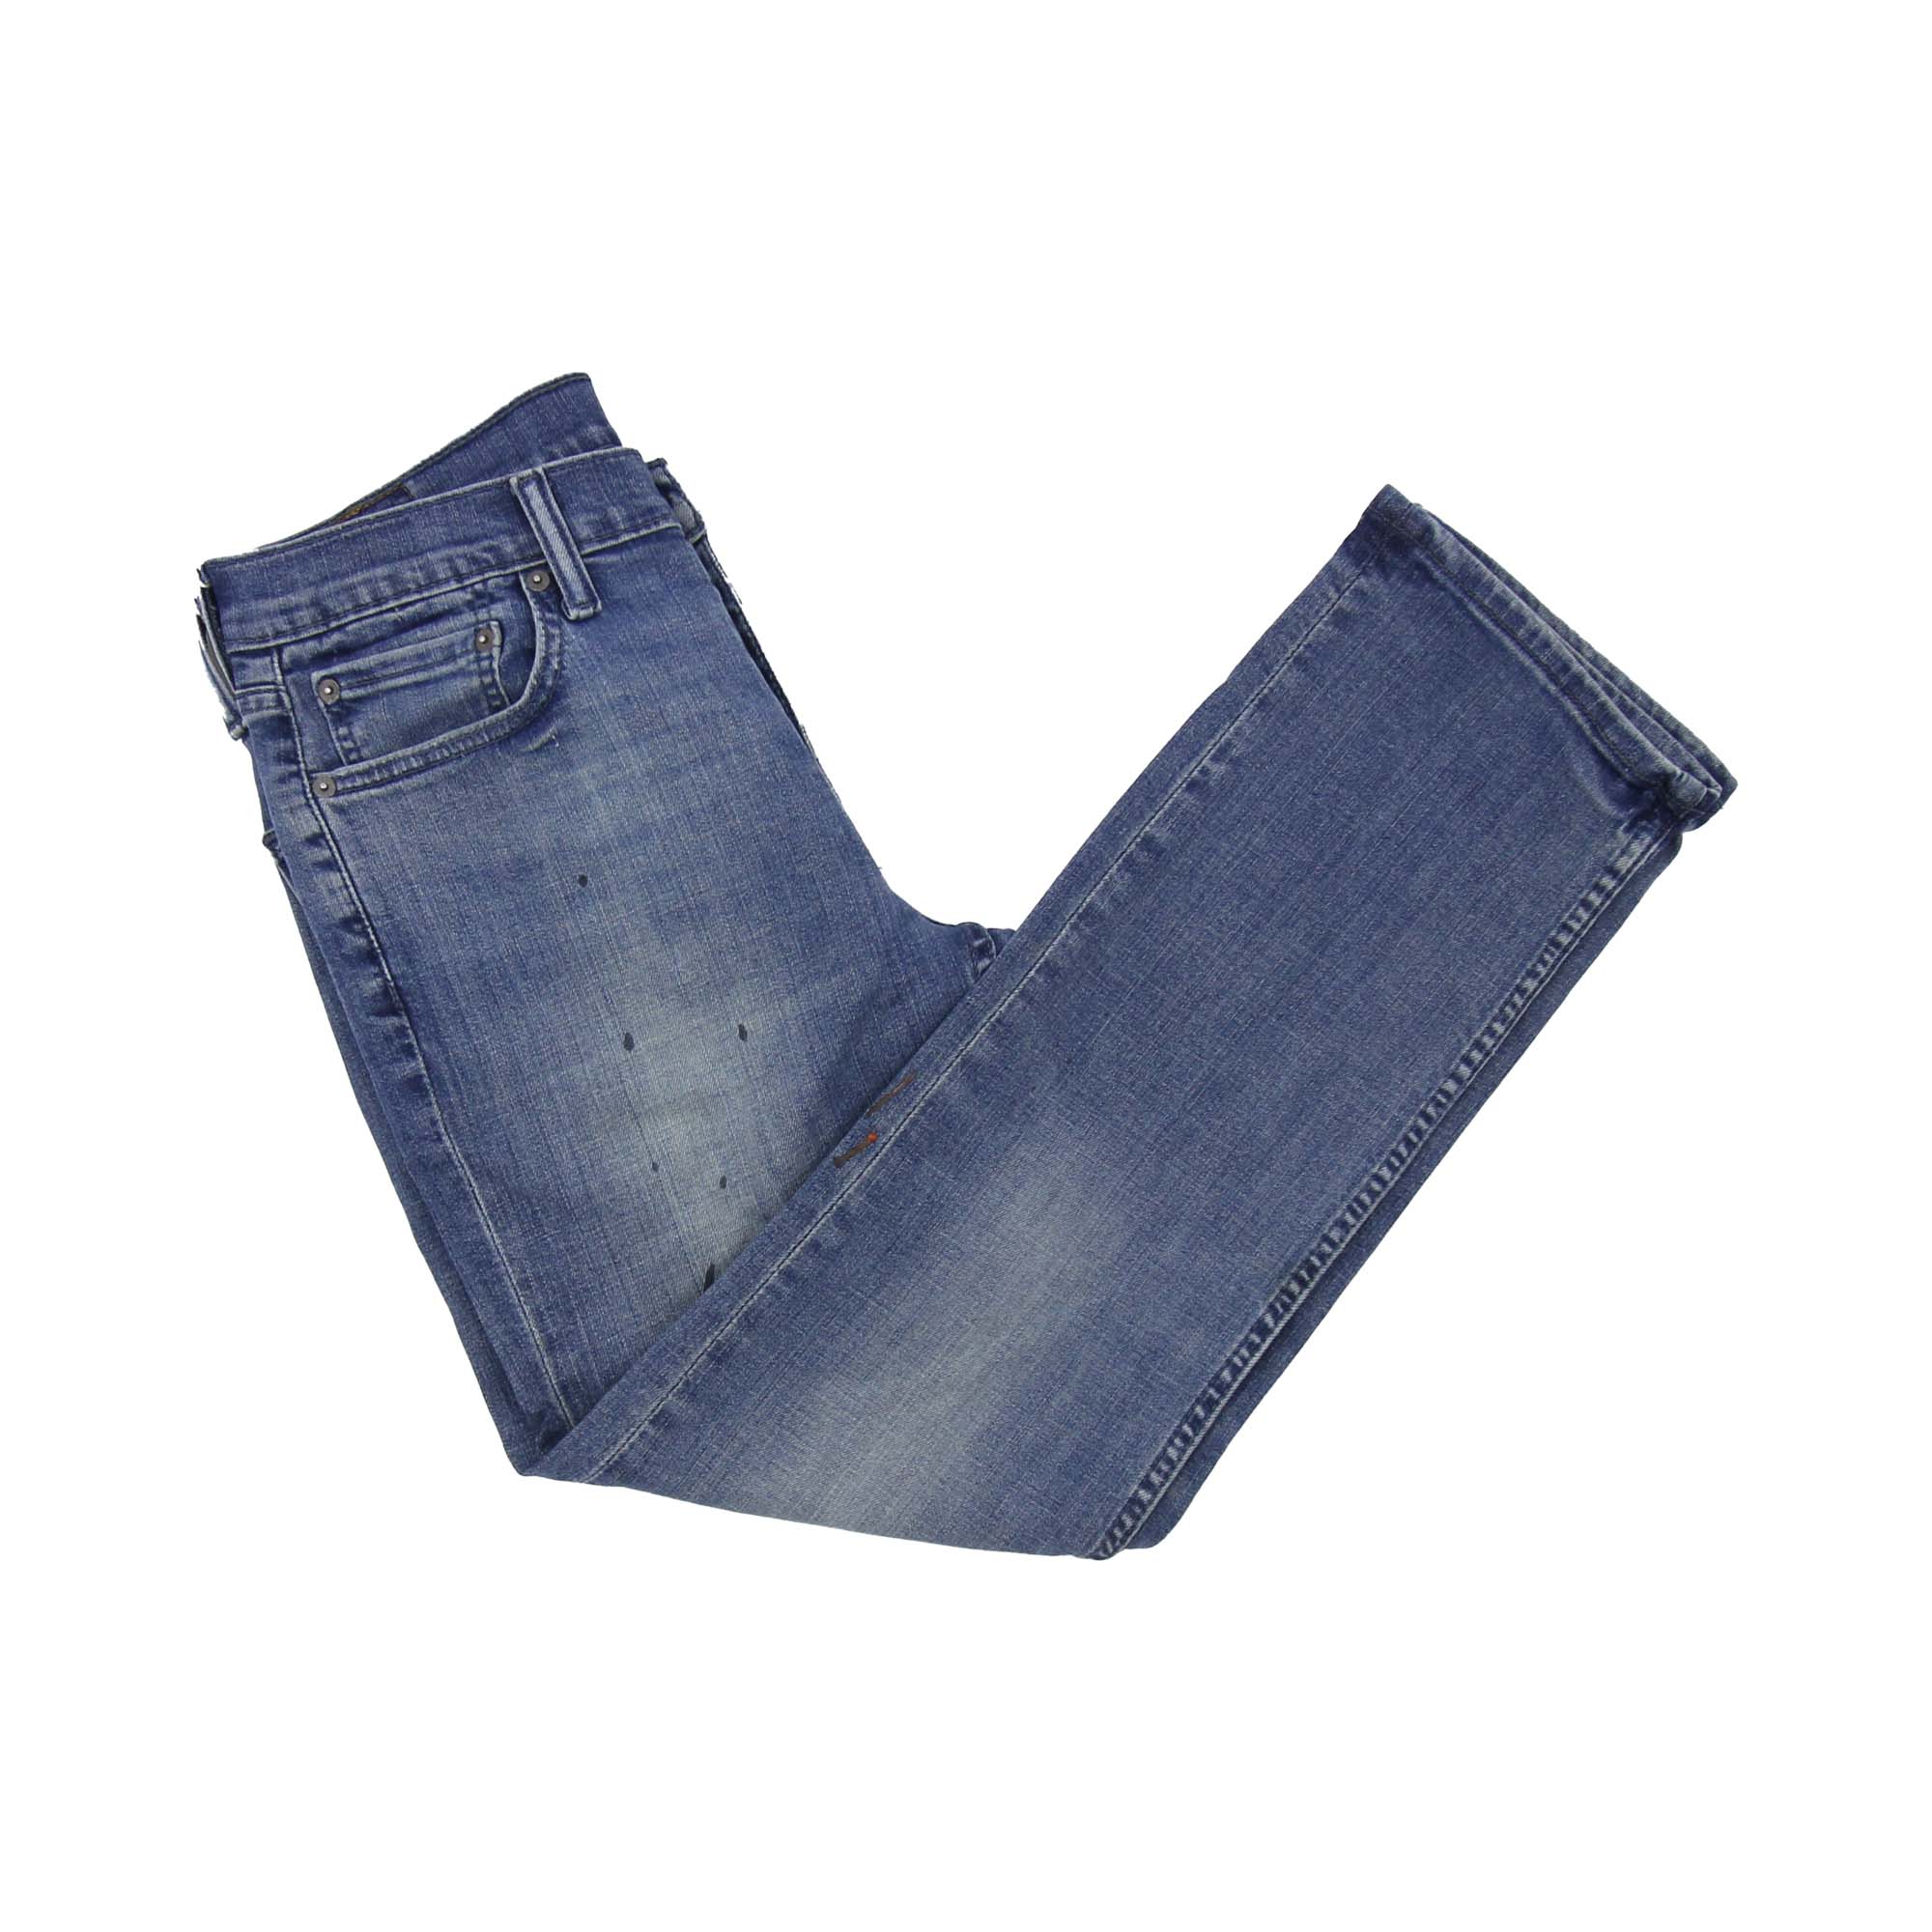 Levi's 514 Jeans  -   W32 L30